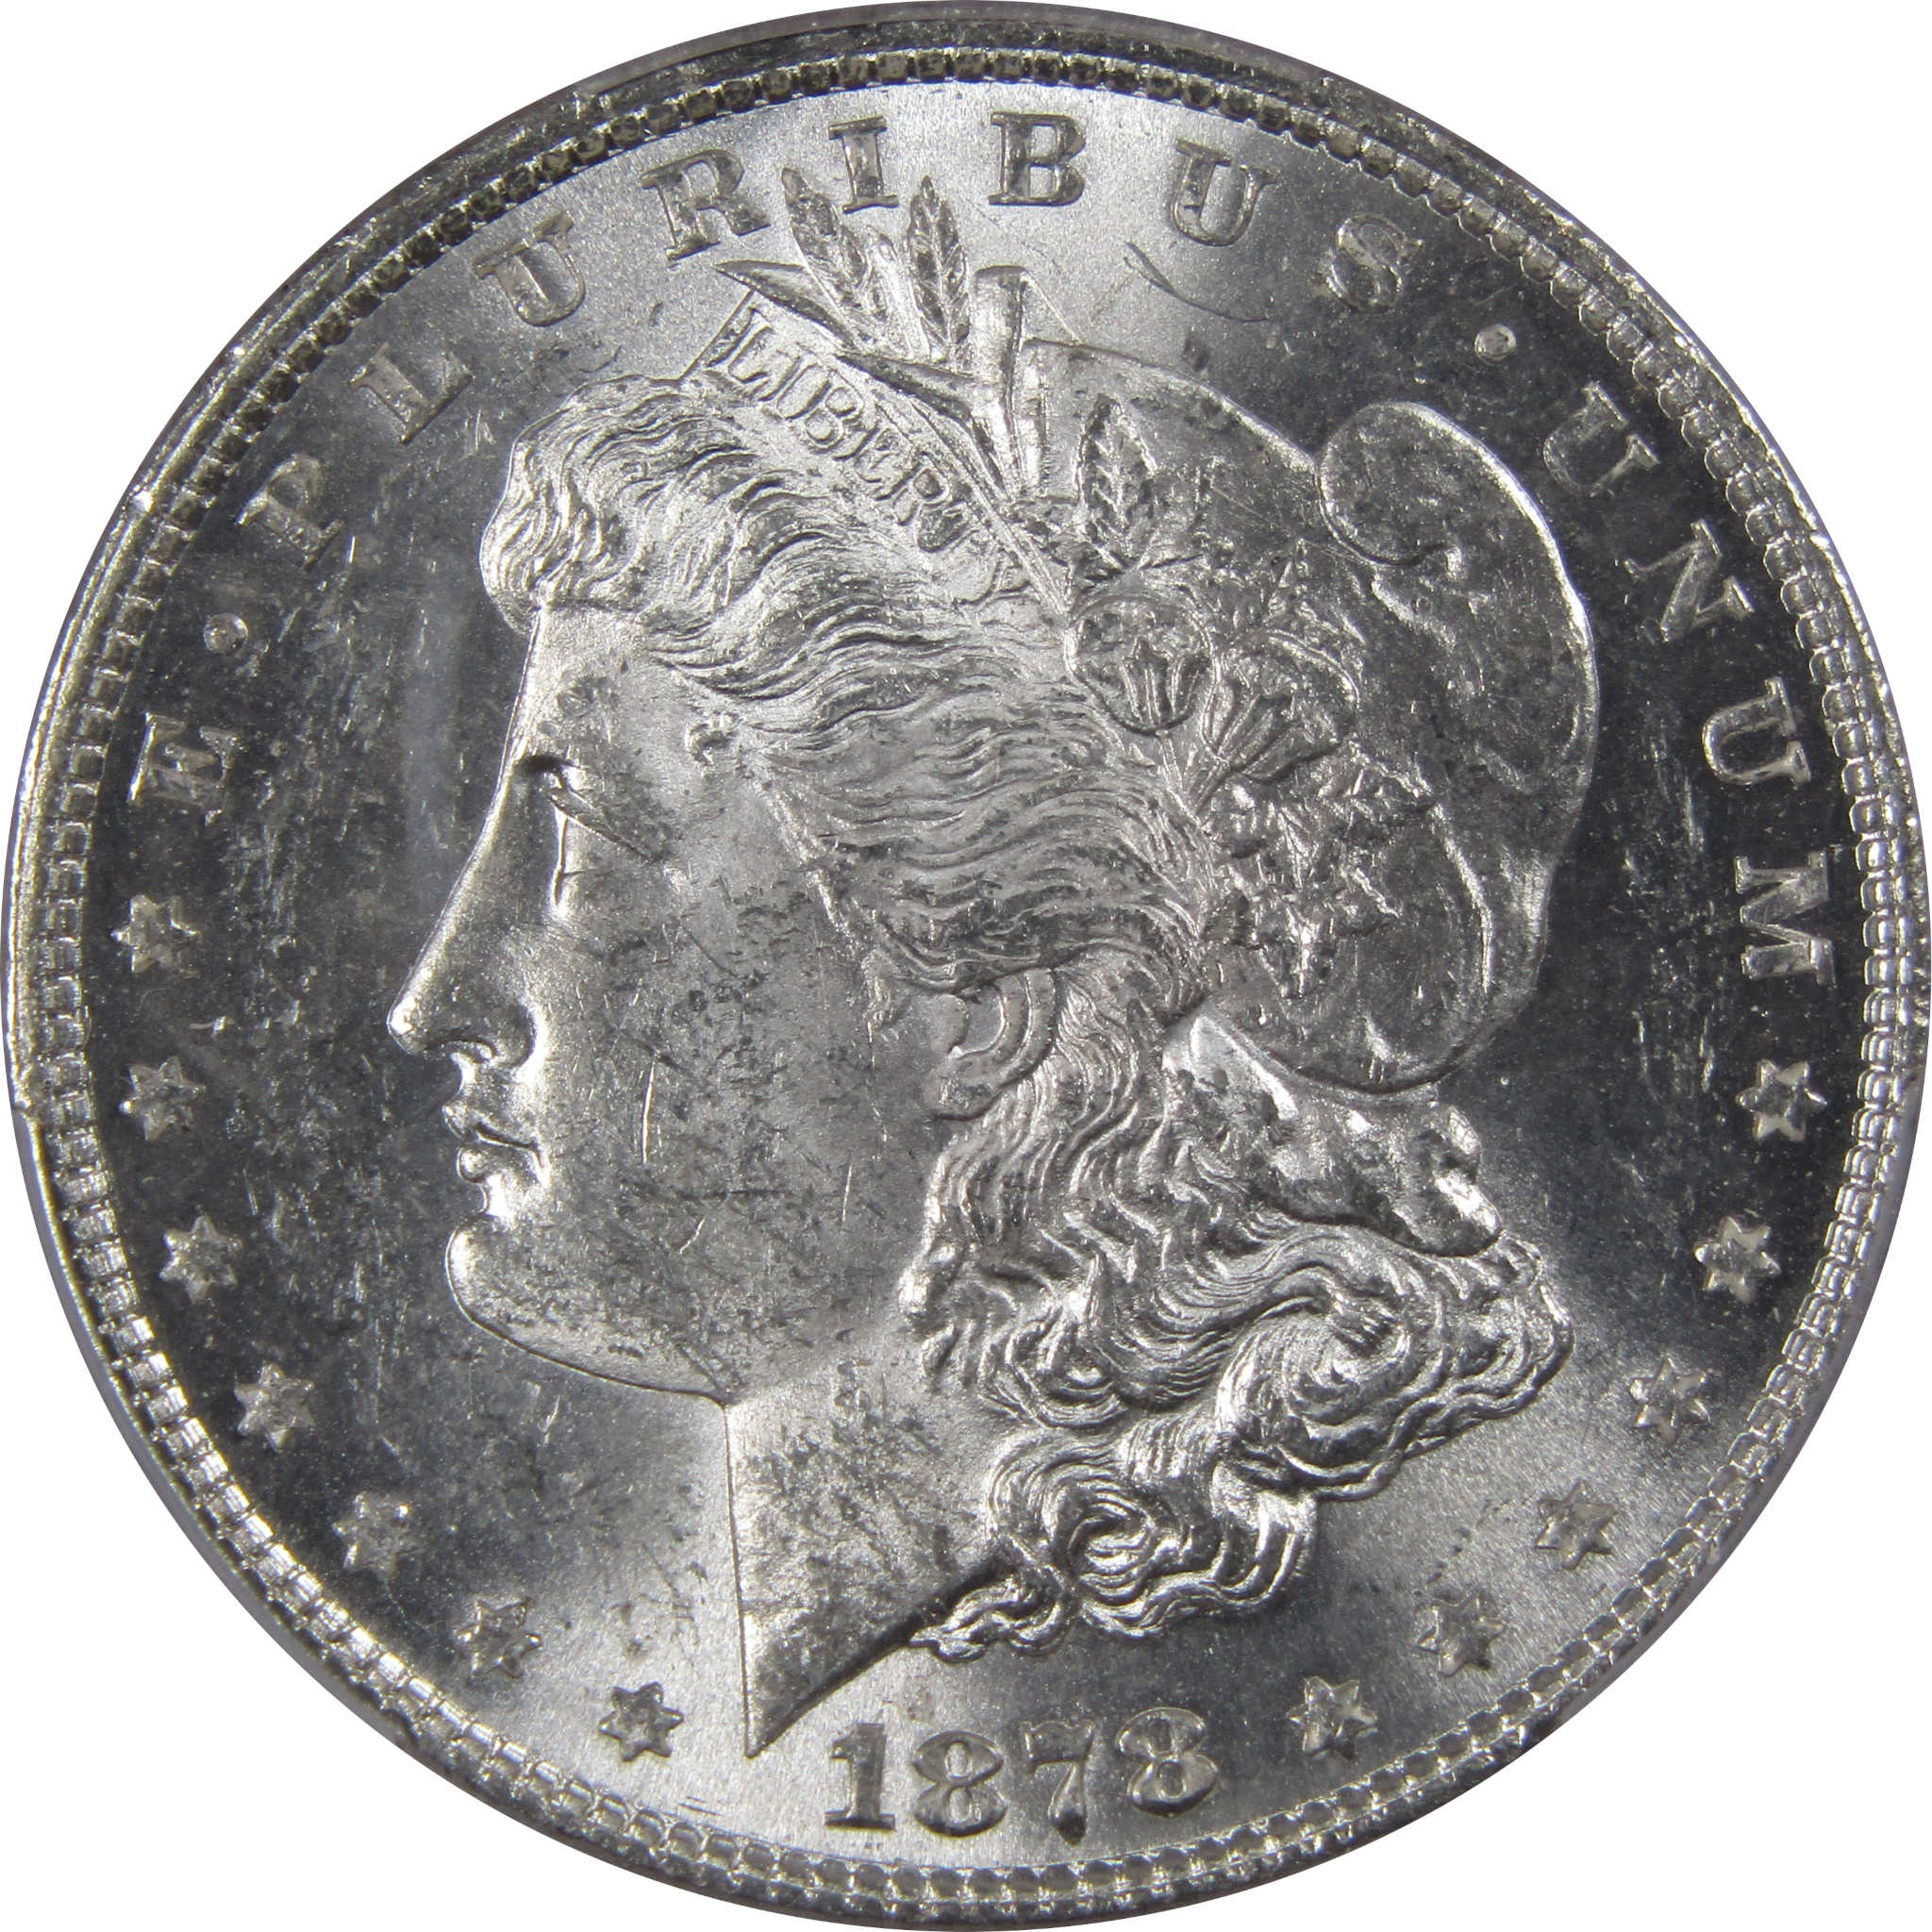 1878 7TF Rev 79 Morgan Dollar MS 62 PCGS Silver SKU:IPC6193 - Morgan coin - Morgan silver dollar - Morgan silver dollar for sale - Profile Coins &amp; Collectibles